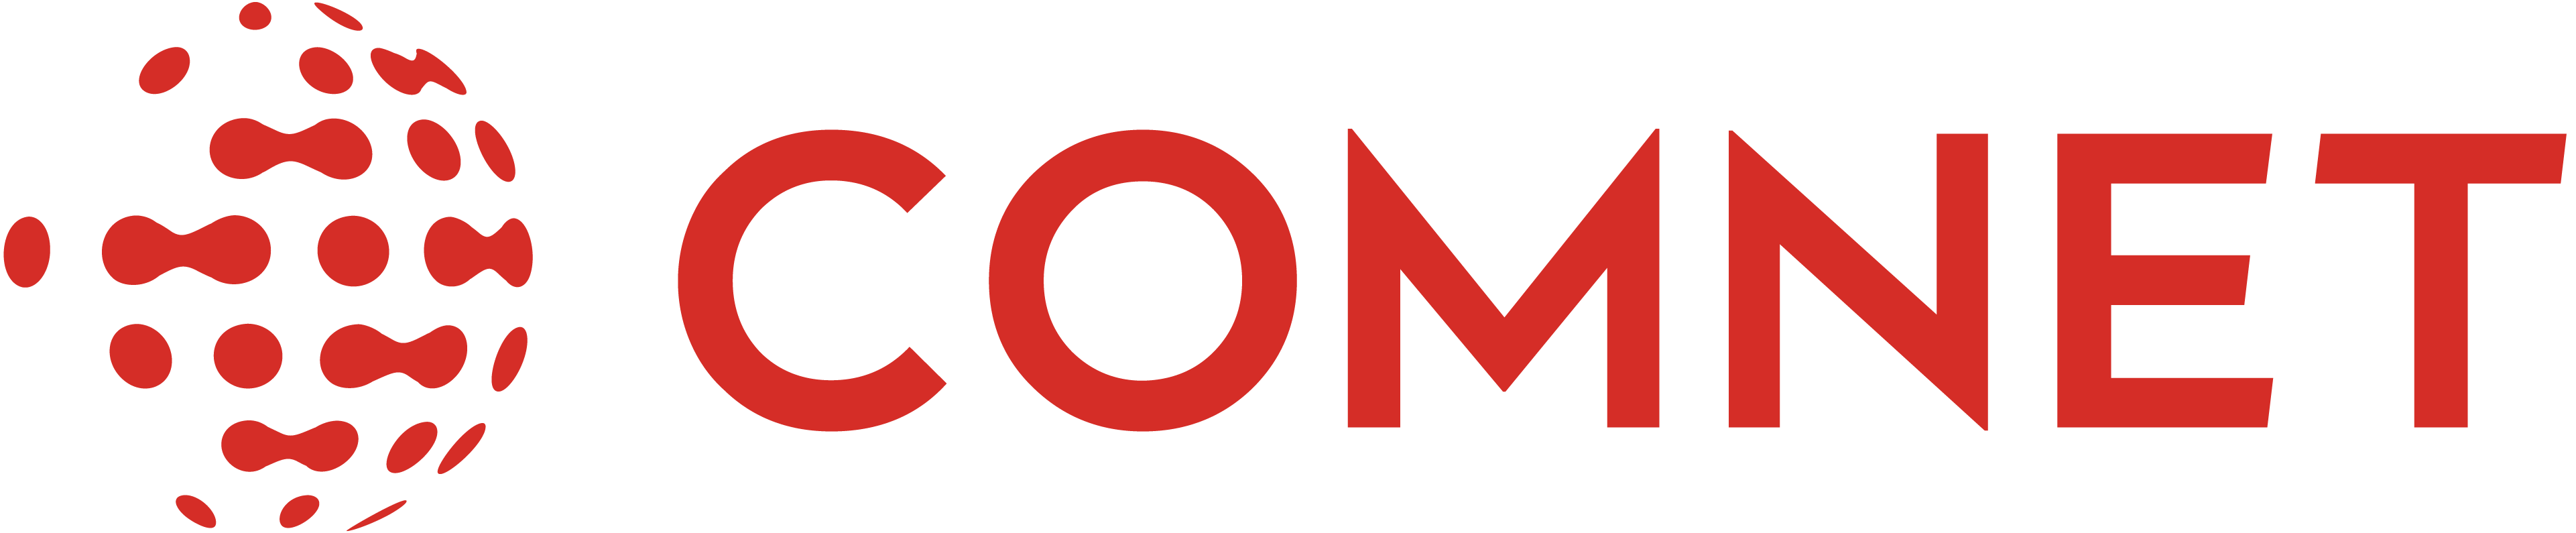 Comnet Systems Pte Ltd company logo